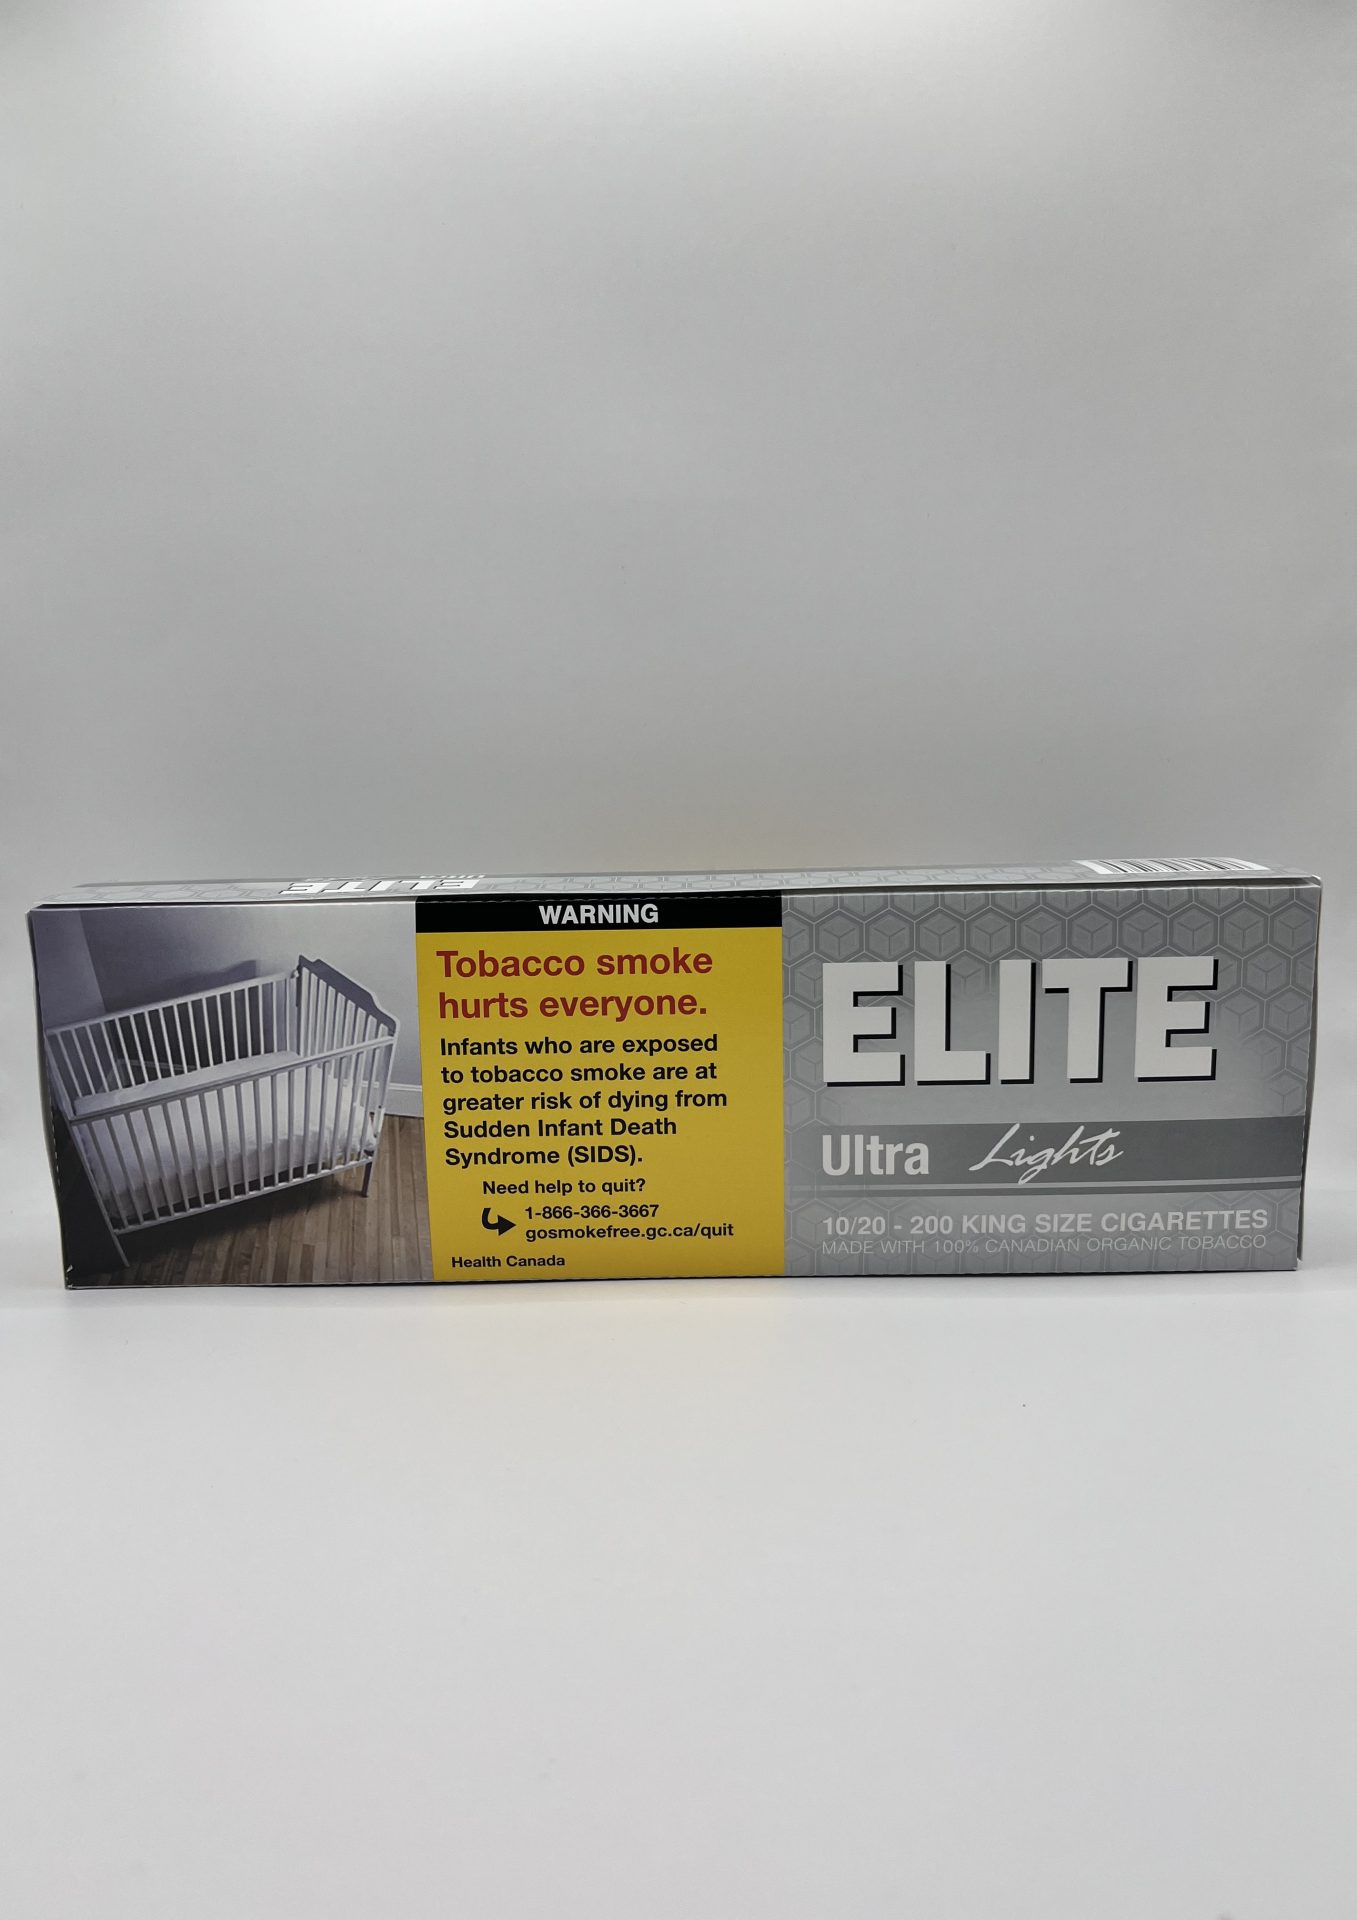 A Carton of Elite Ultra Lights Cigarettes